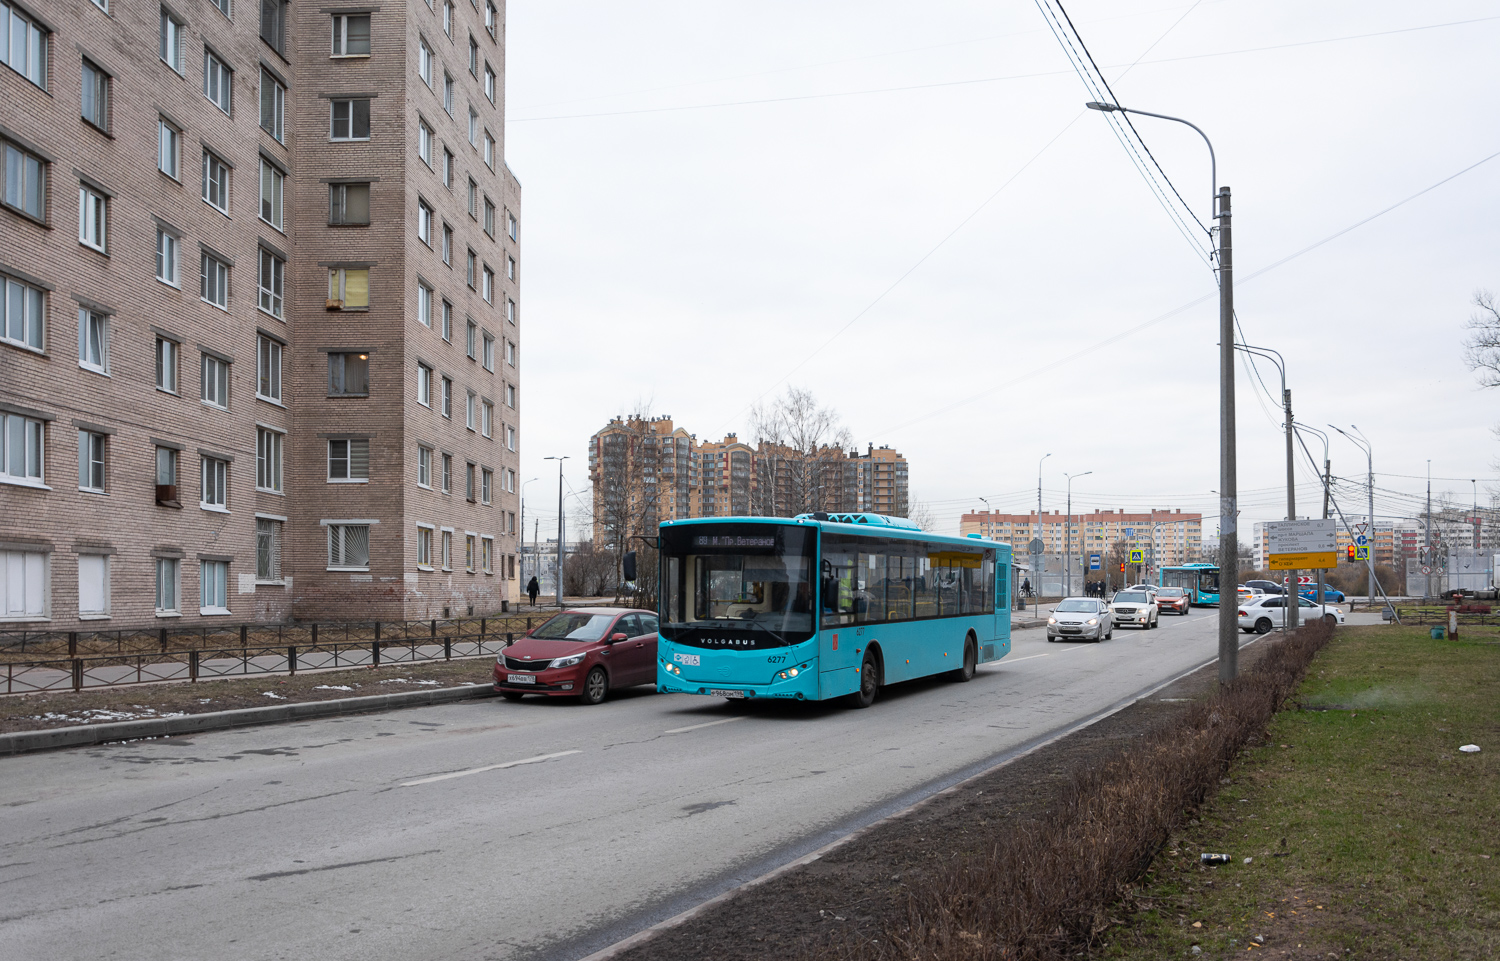 Petersburg, Volgabus-5270.G4 (LNG) # 6277